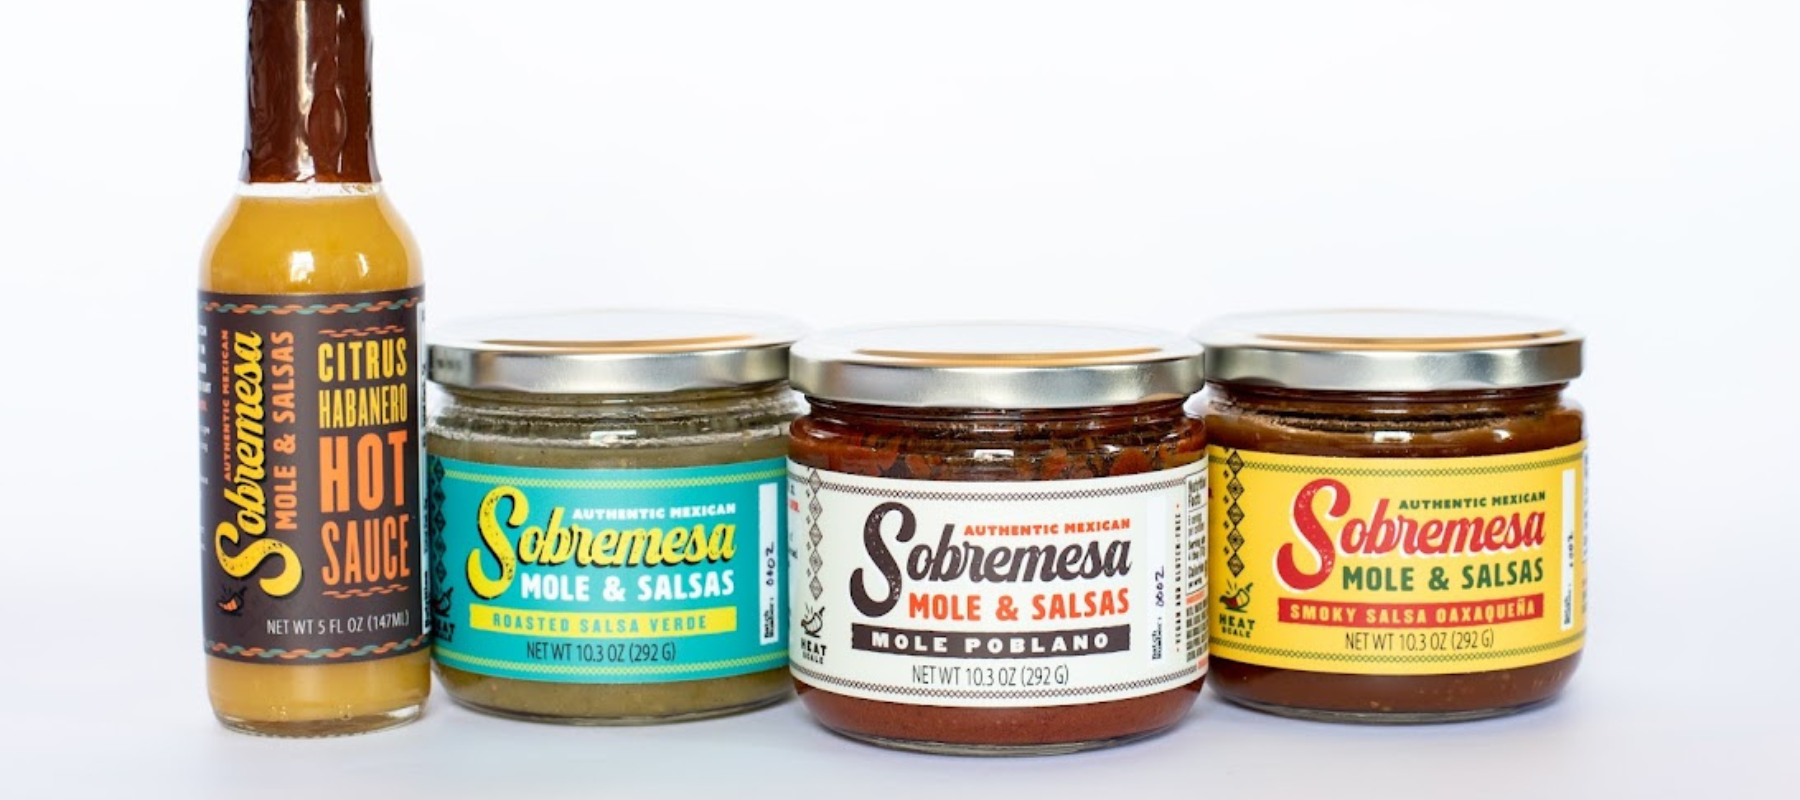 Sobremesa Mole and salsas in their packaging